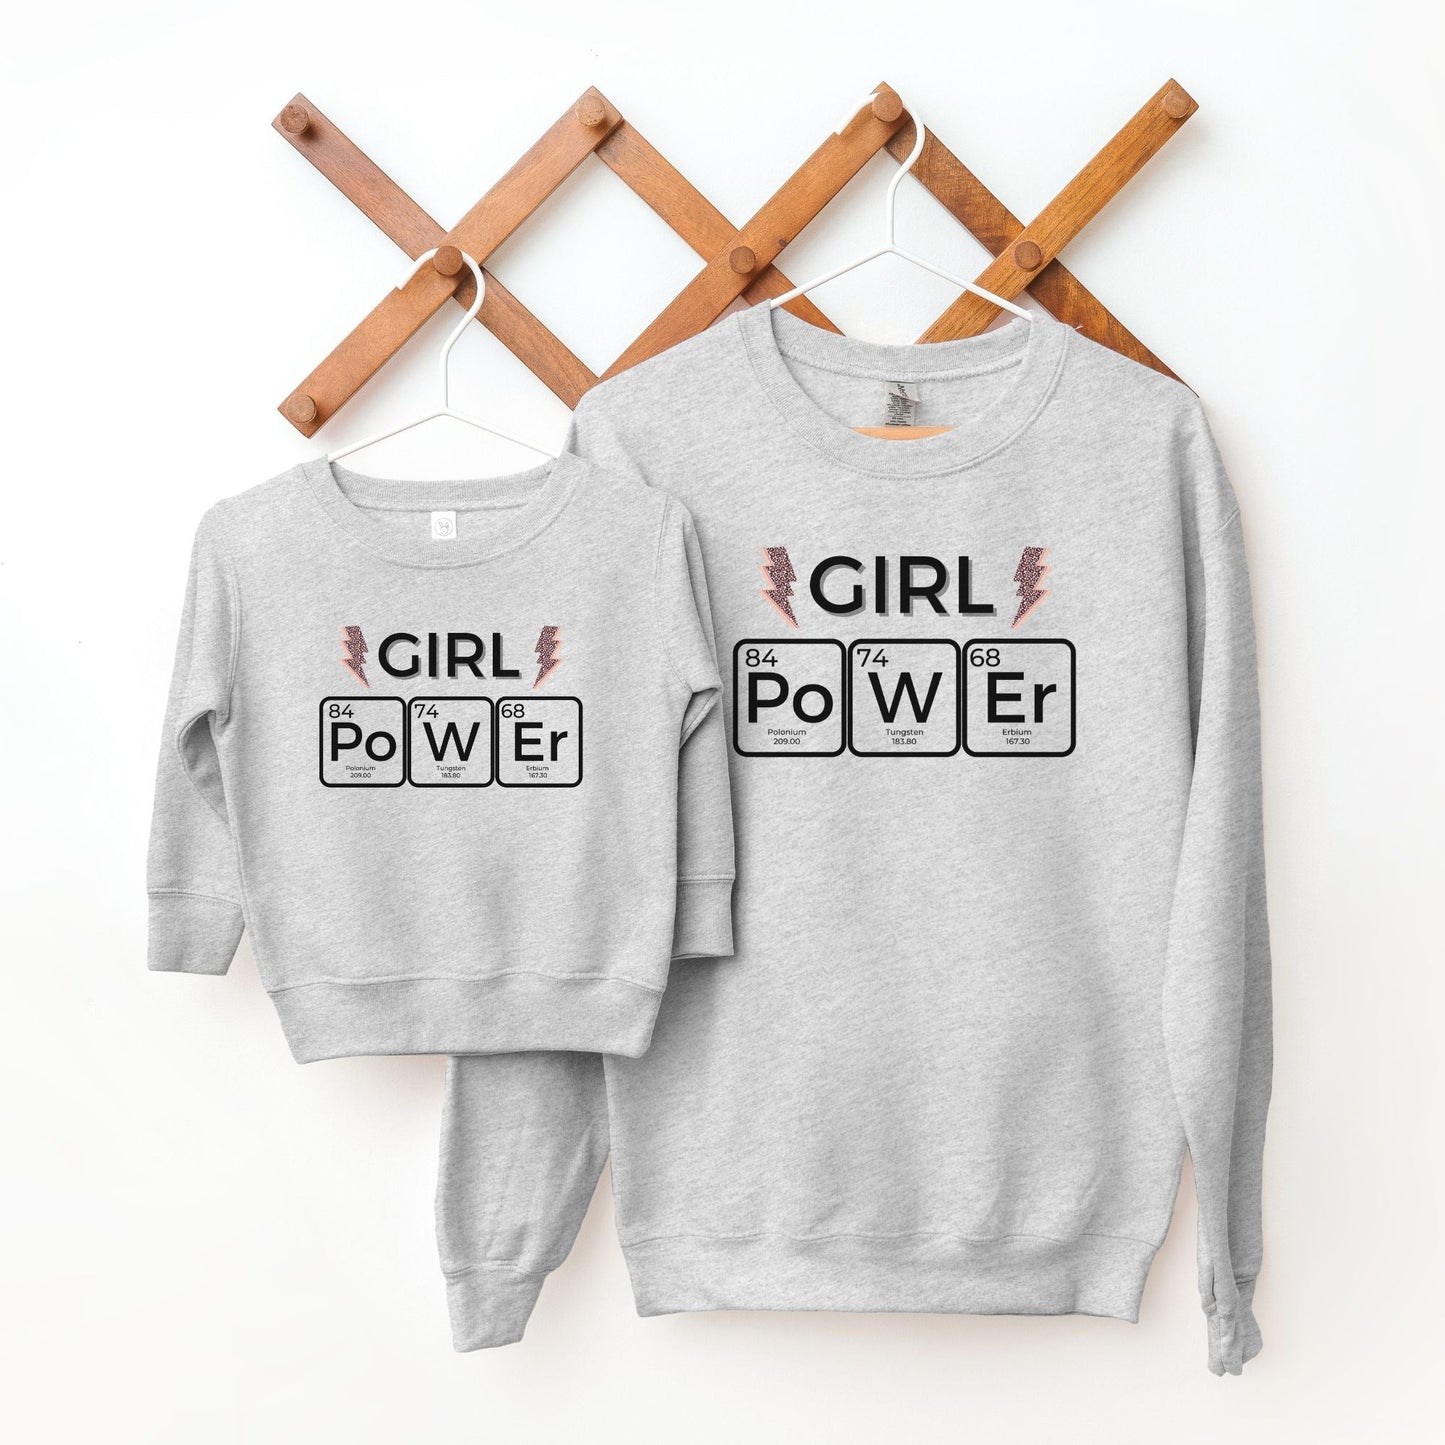 Girl Power ⚡💥 Toddler Sweatshirt